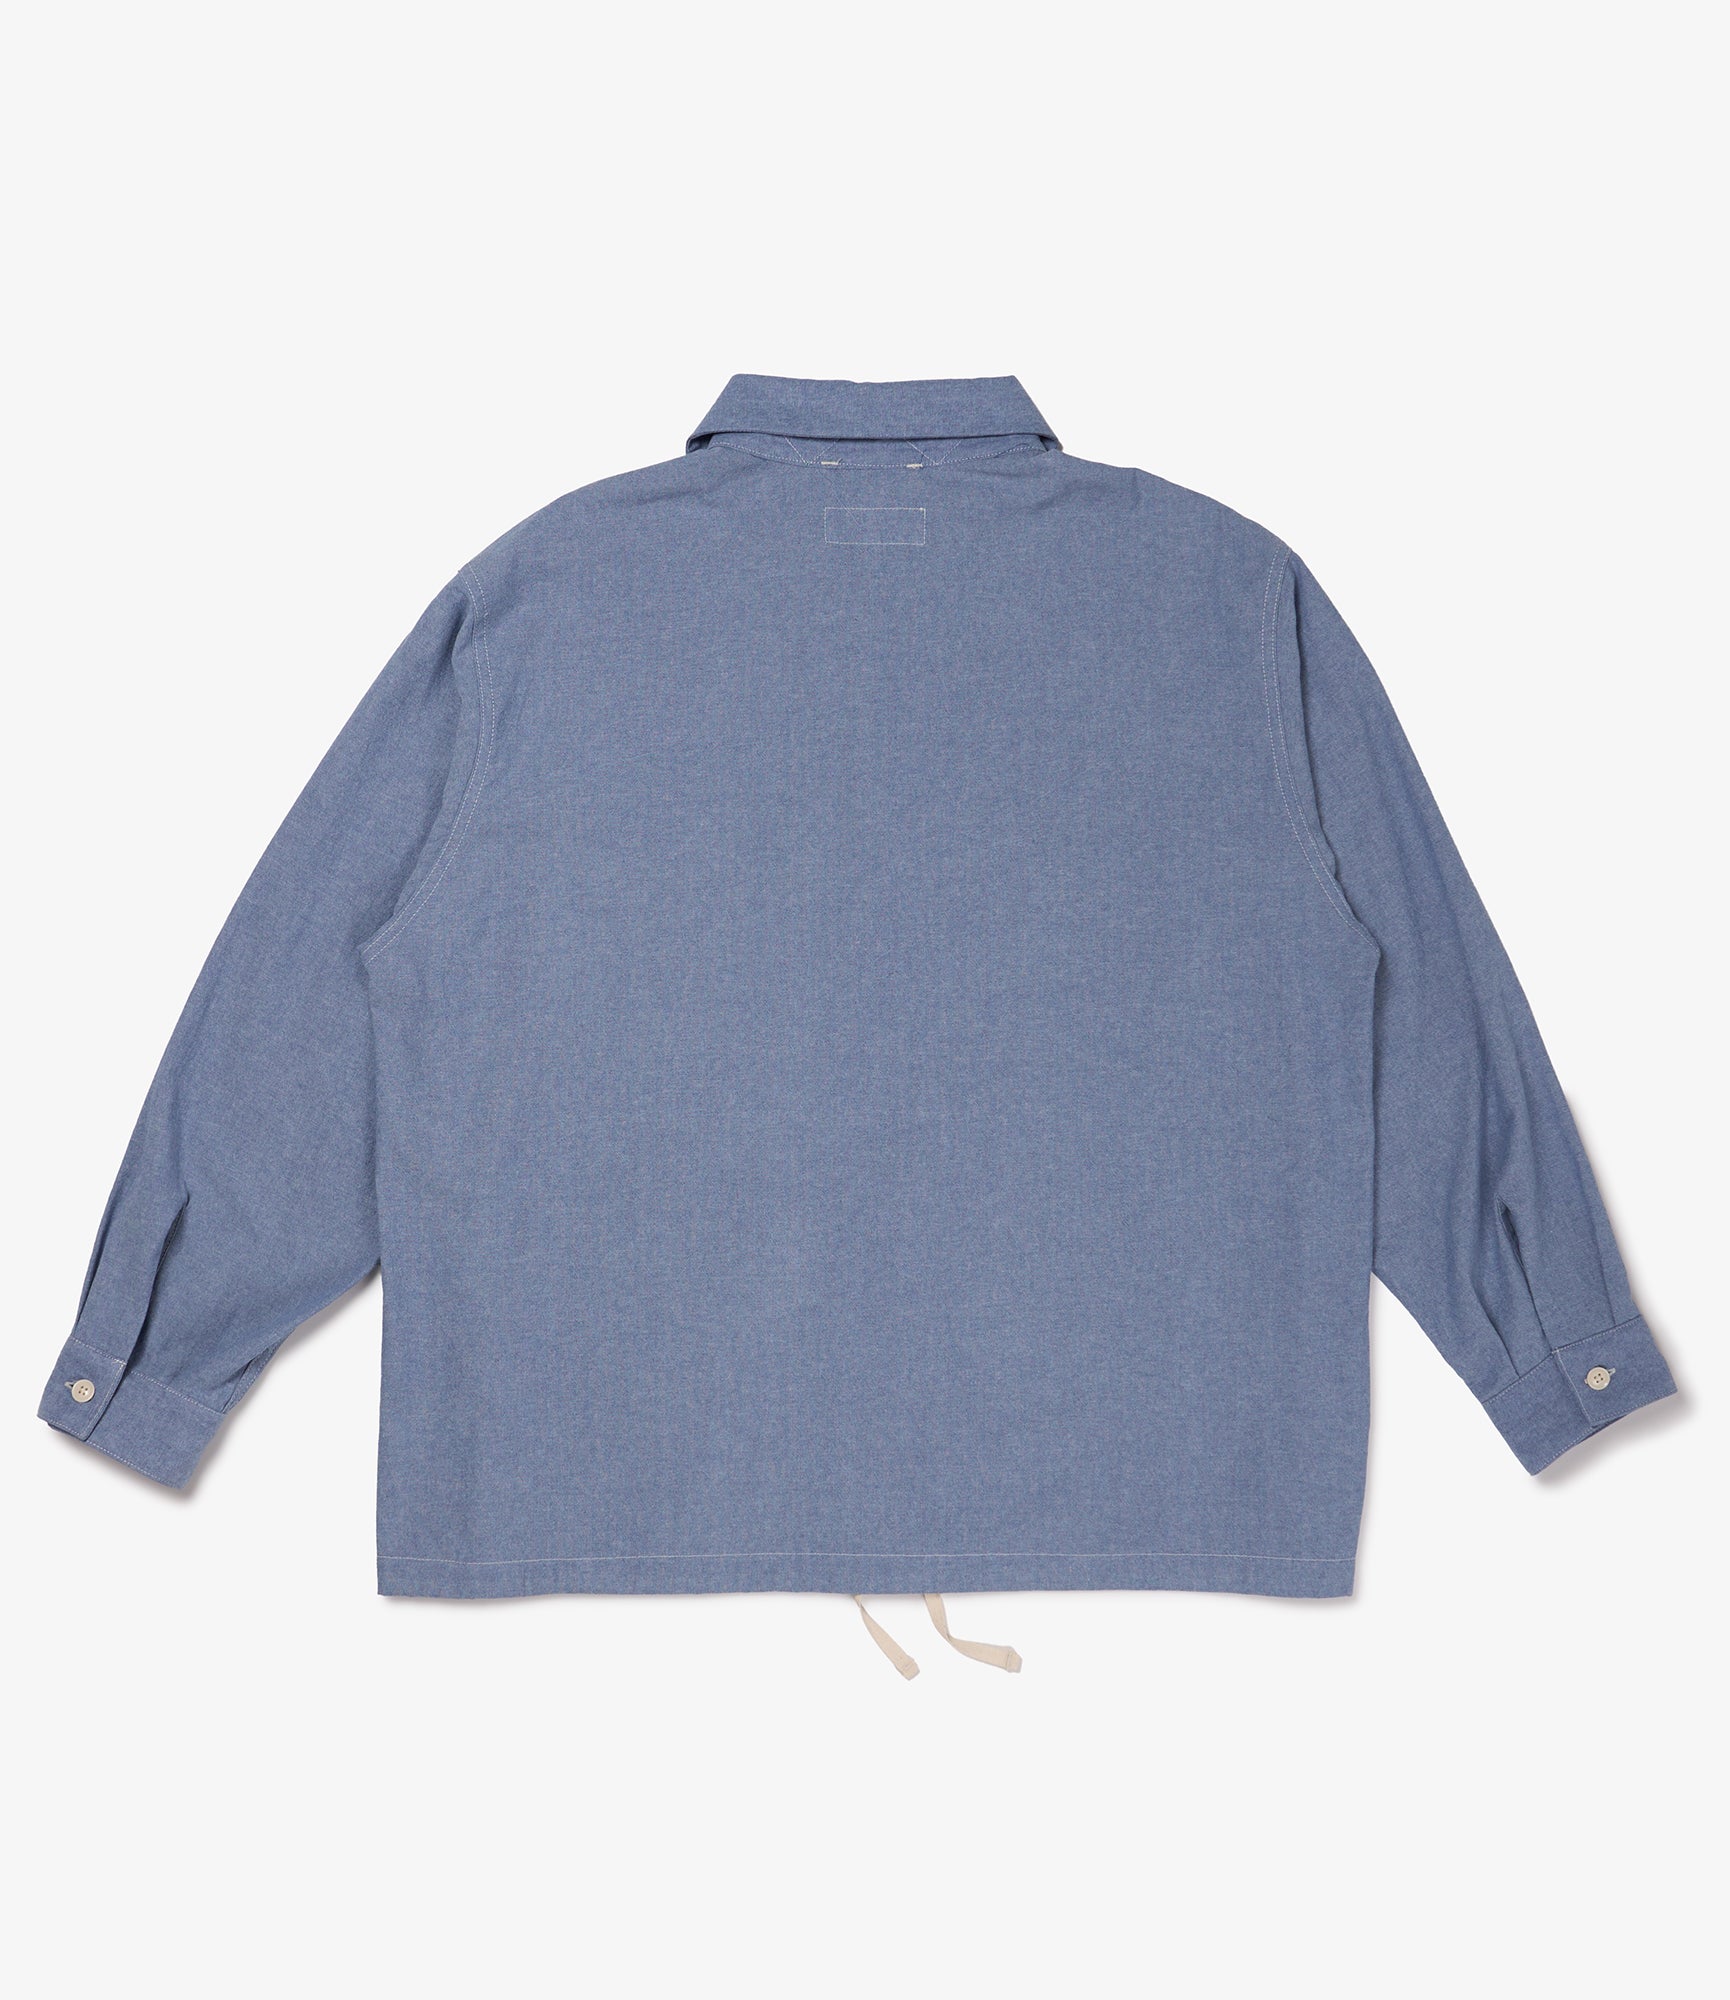 Jumper Shirt - Light Blue 4.5oz Cotton Chambray